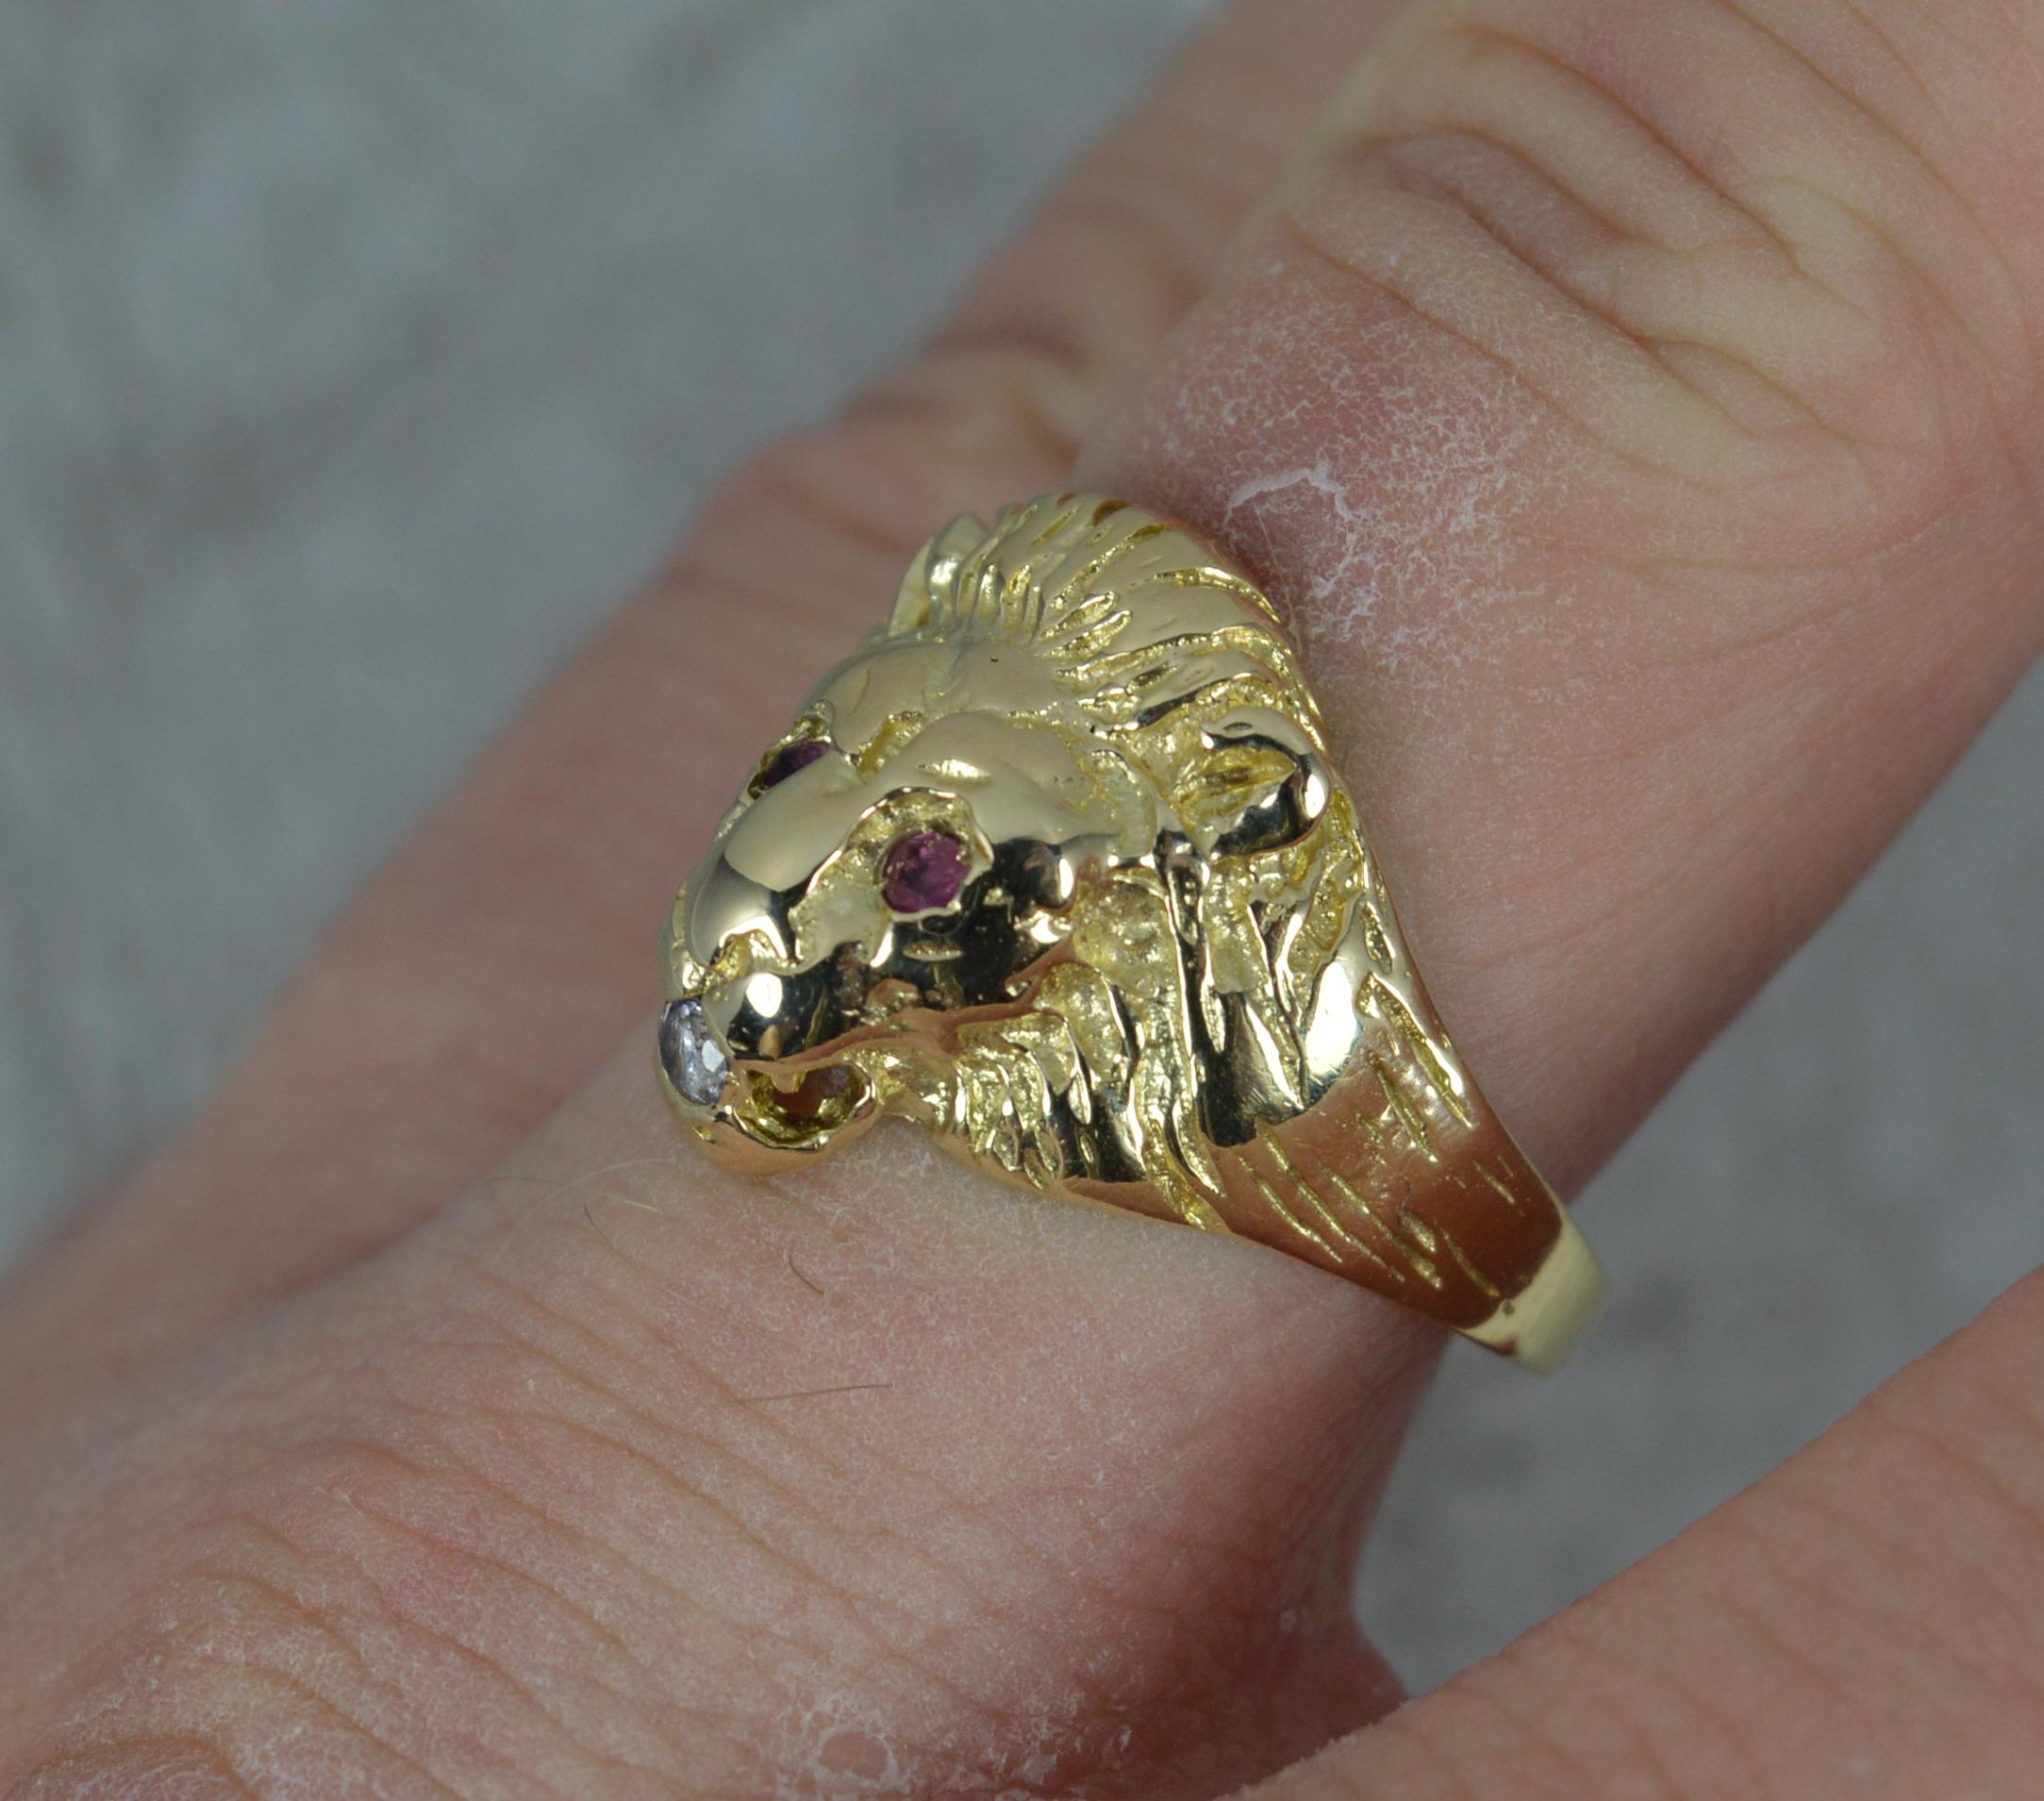 9ct gold lion ring